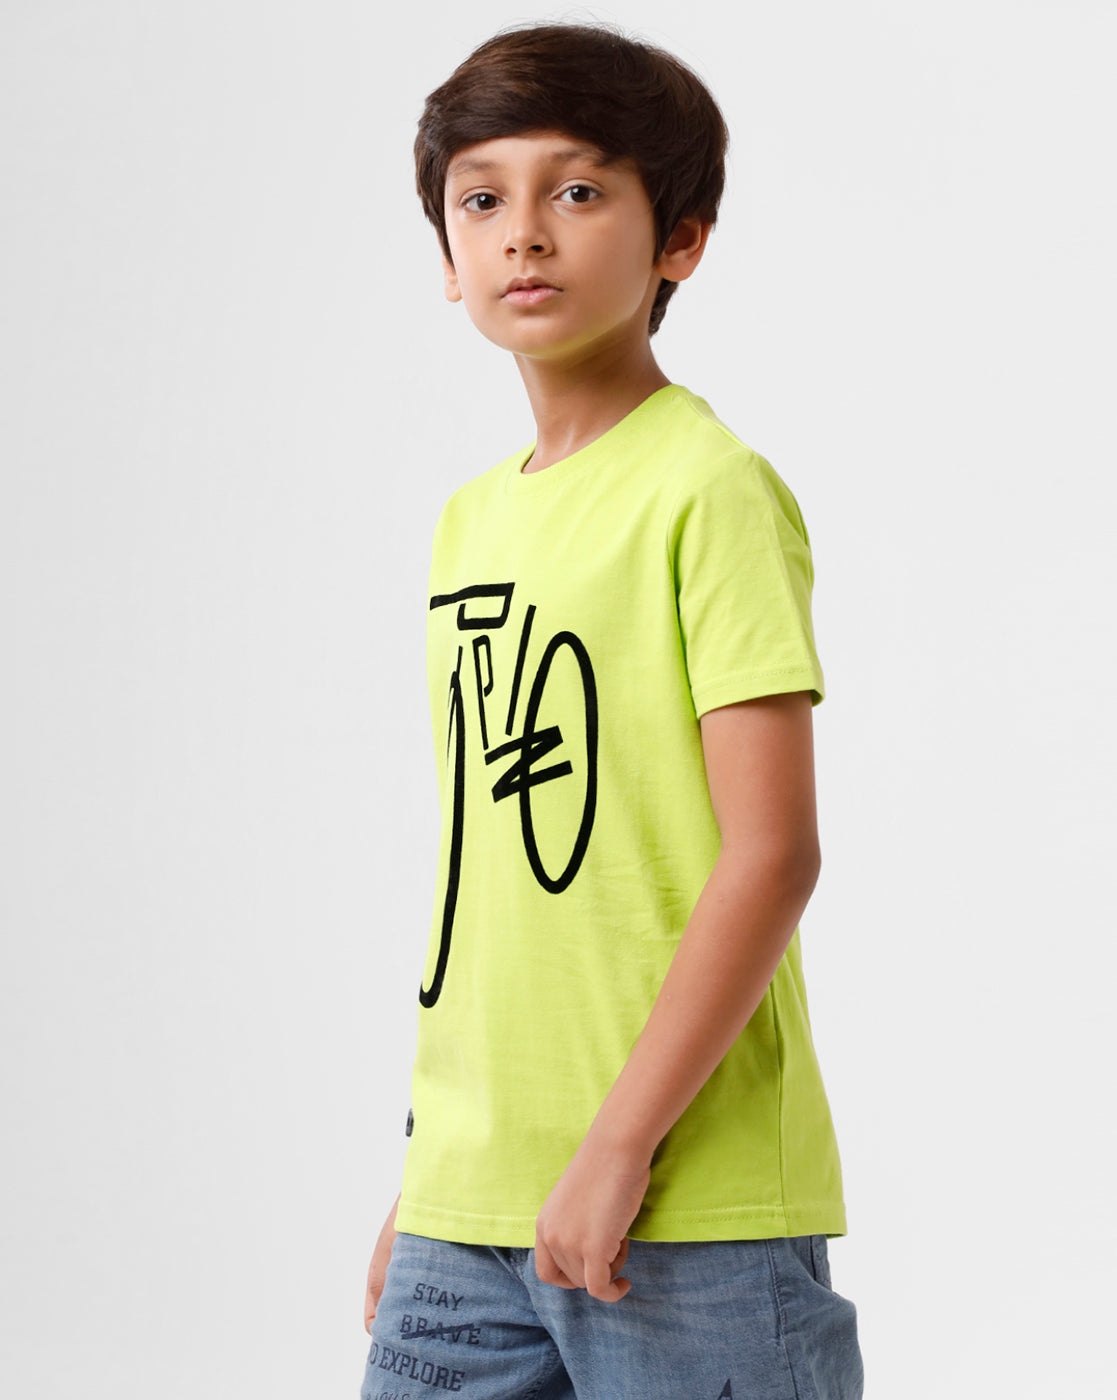 Kids - Boys Printed Half Sleeve T-Shirt Lime